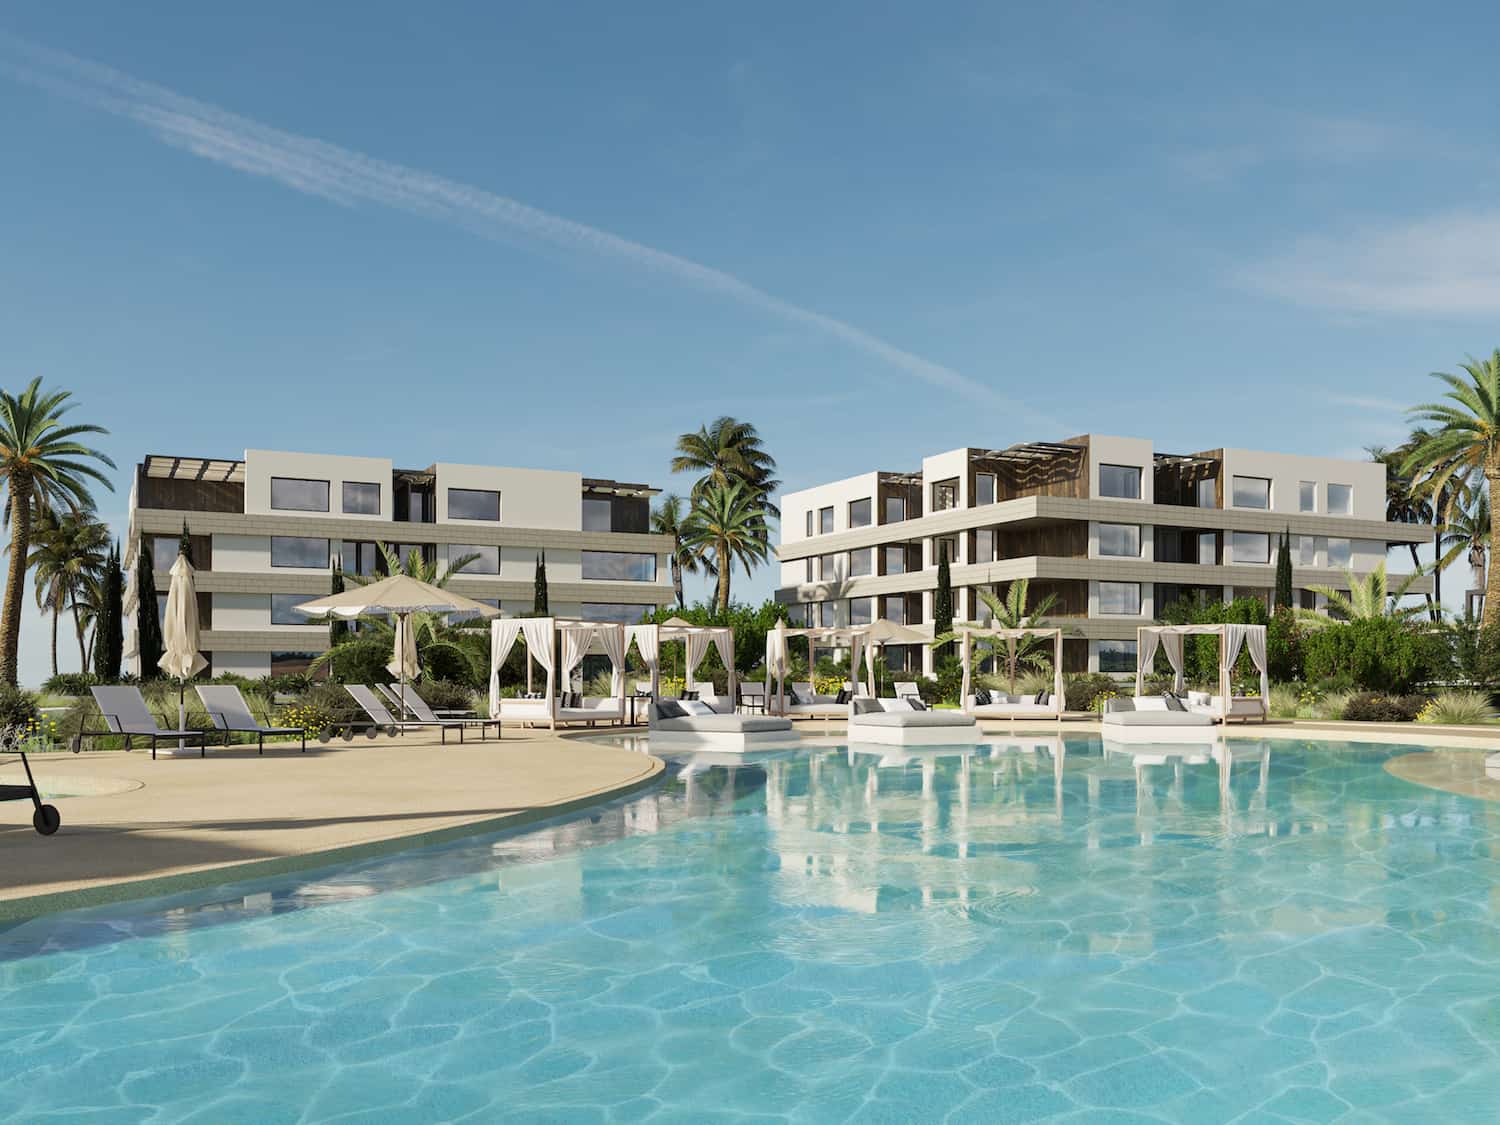 The outdoor pool and building blocks of Kimpton Aysla Mallorca